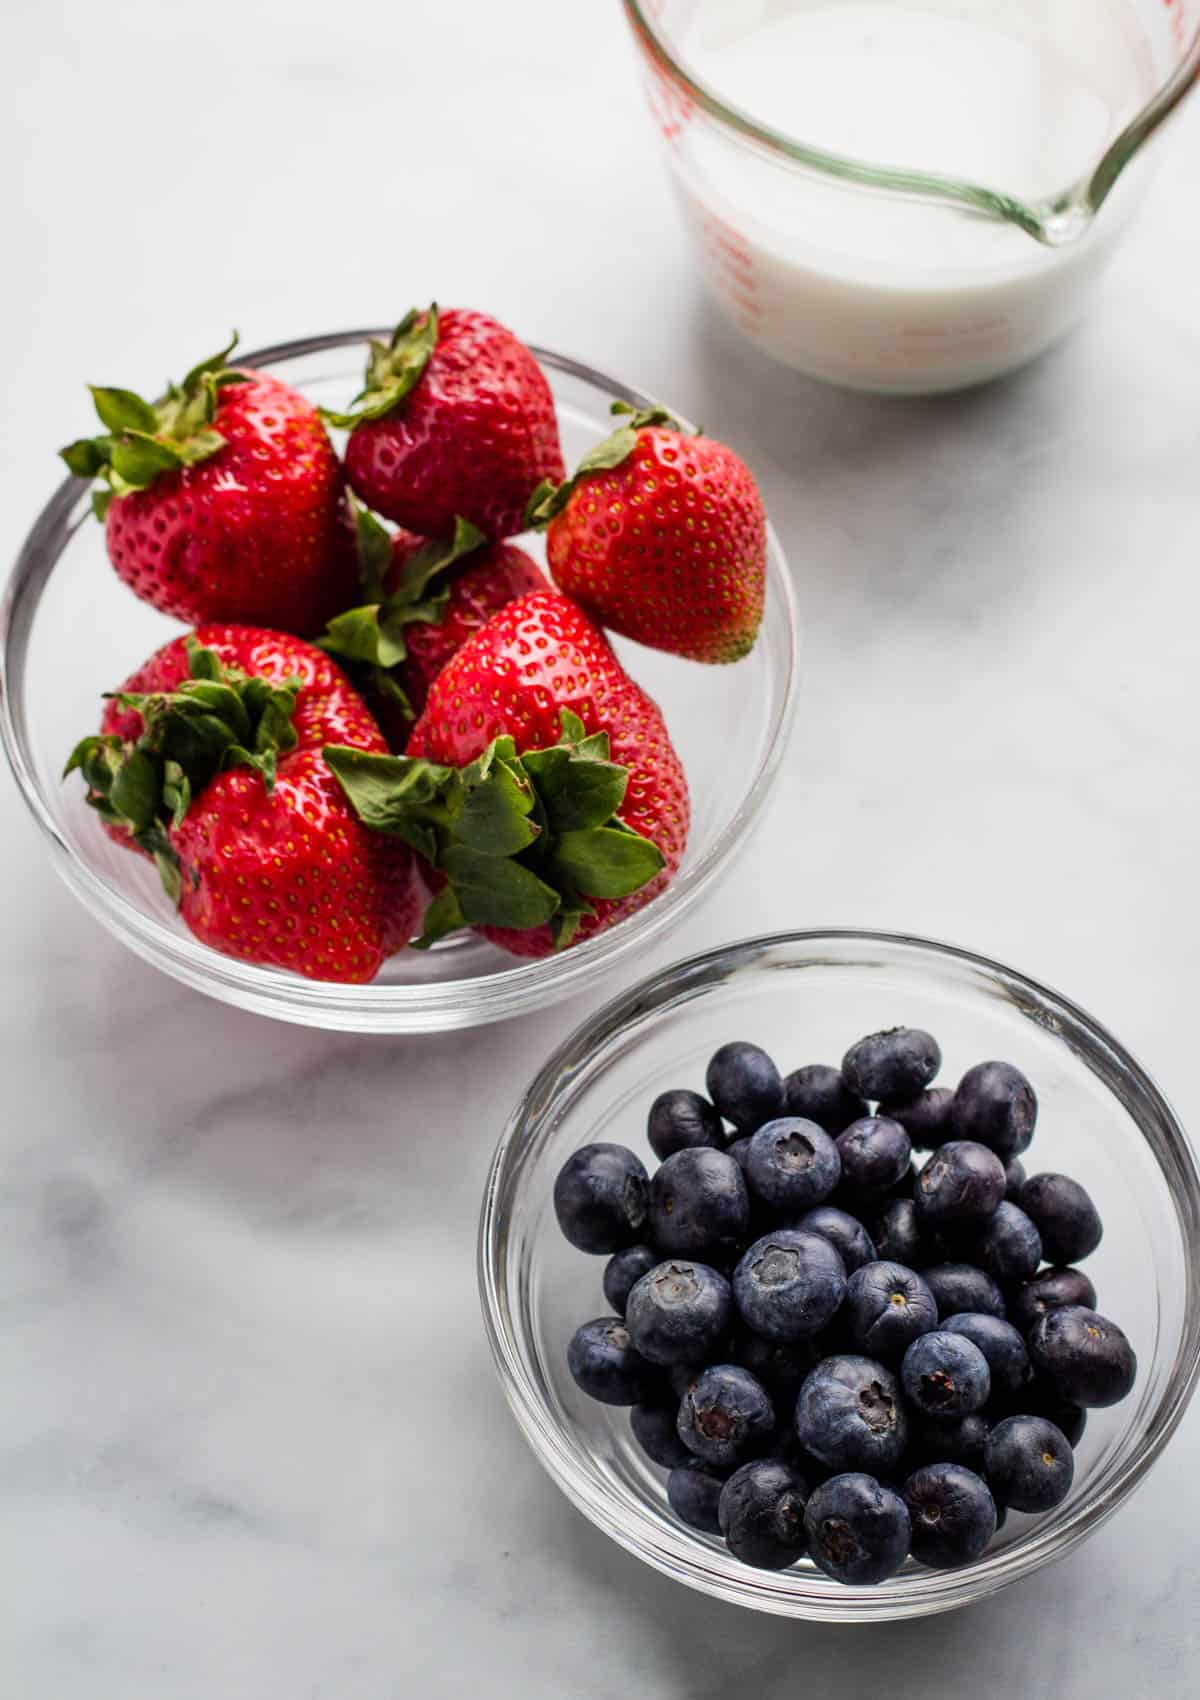 Strawberries, blueberries, and almond milk.
